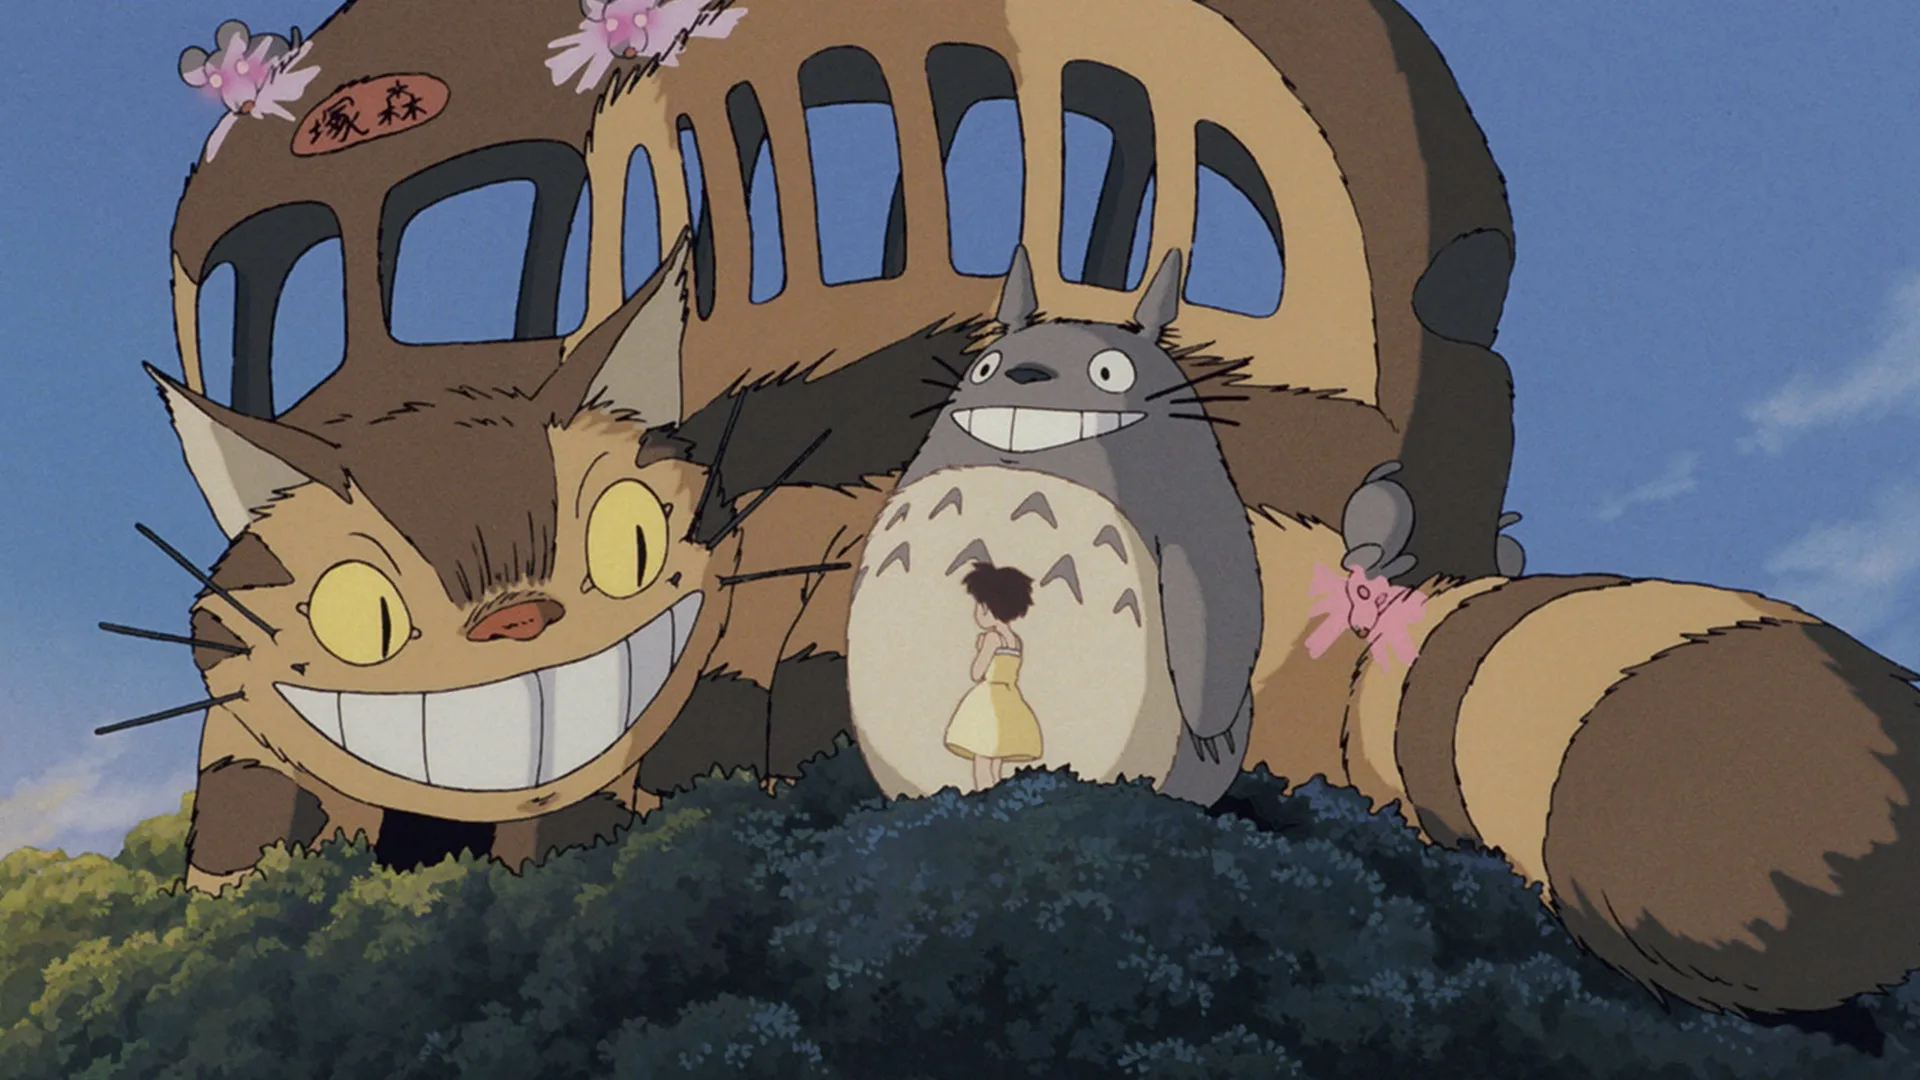 Catbus from My Neighbour Totoro